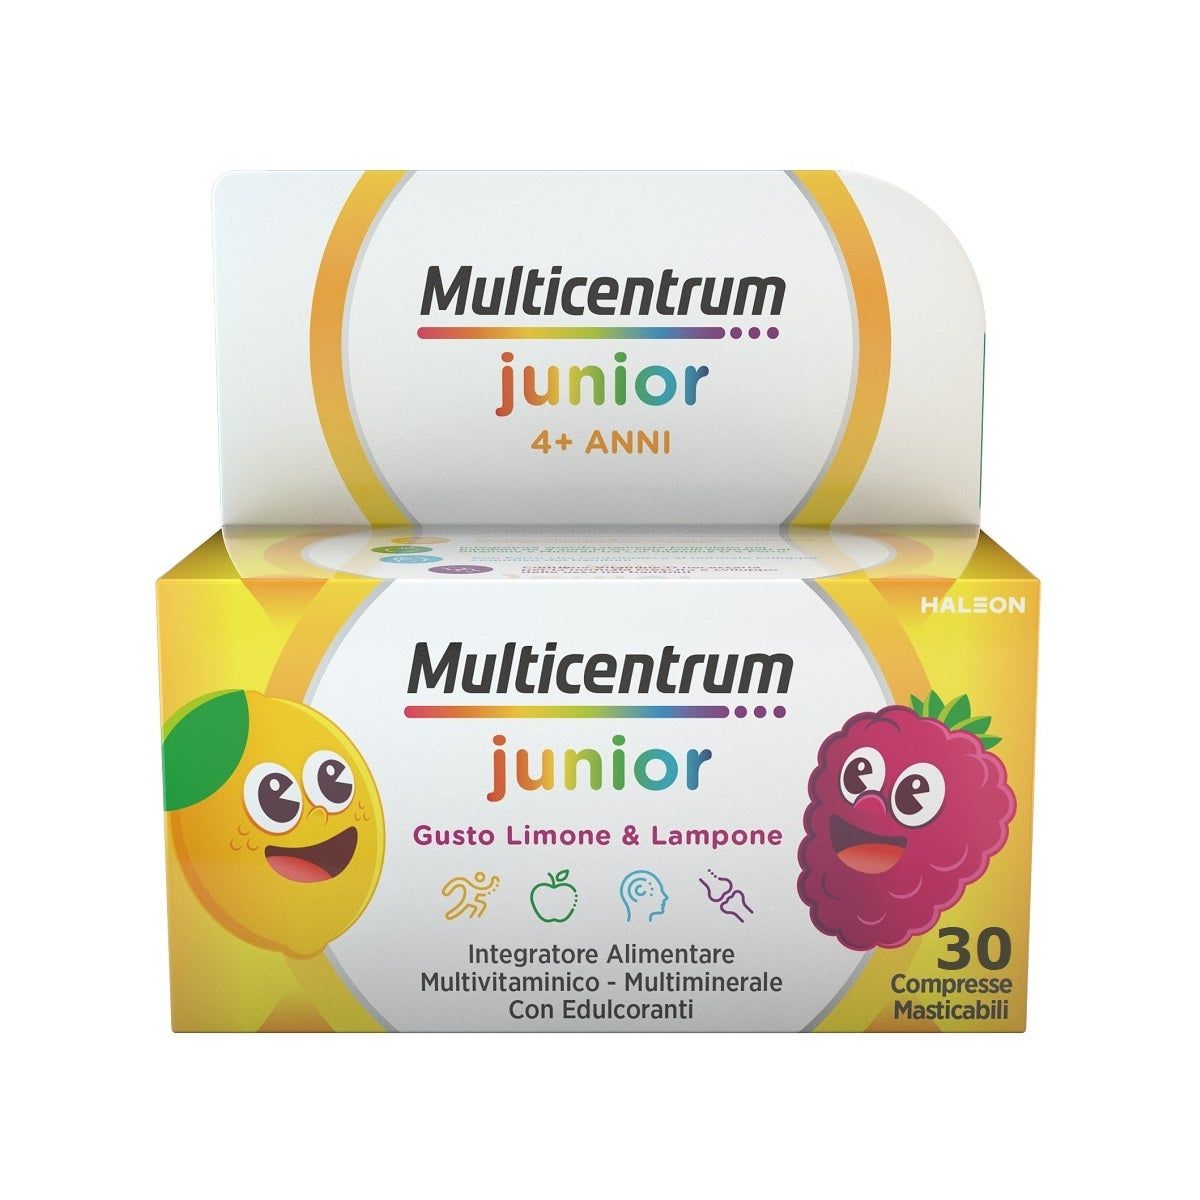 Multicentrum junior 30 compresse masticabili a € 12,80 su Farmacia Pasquino